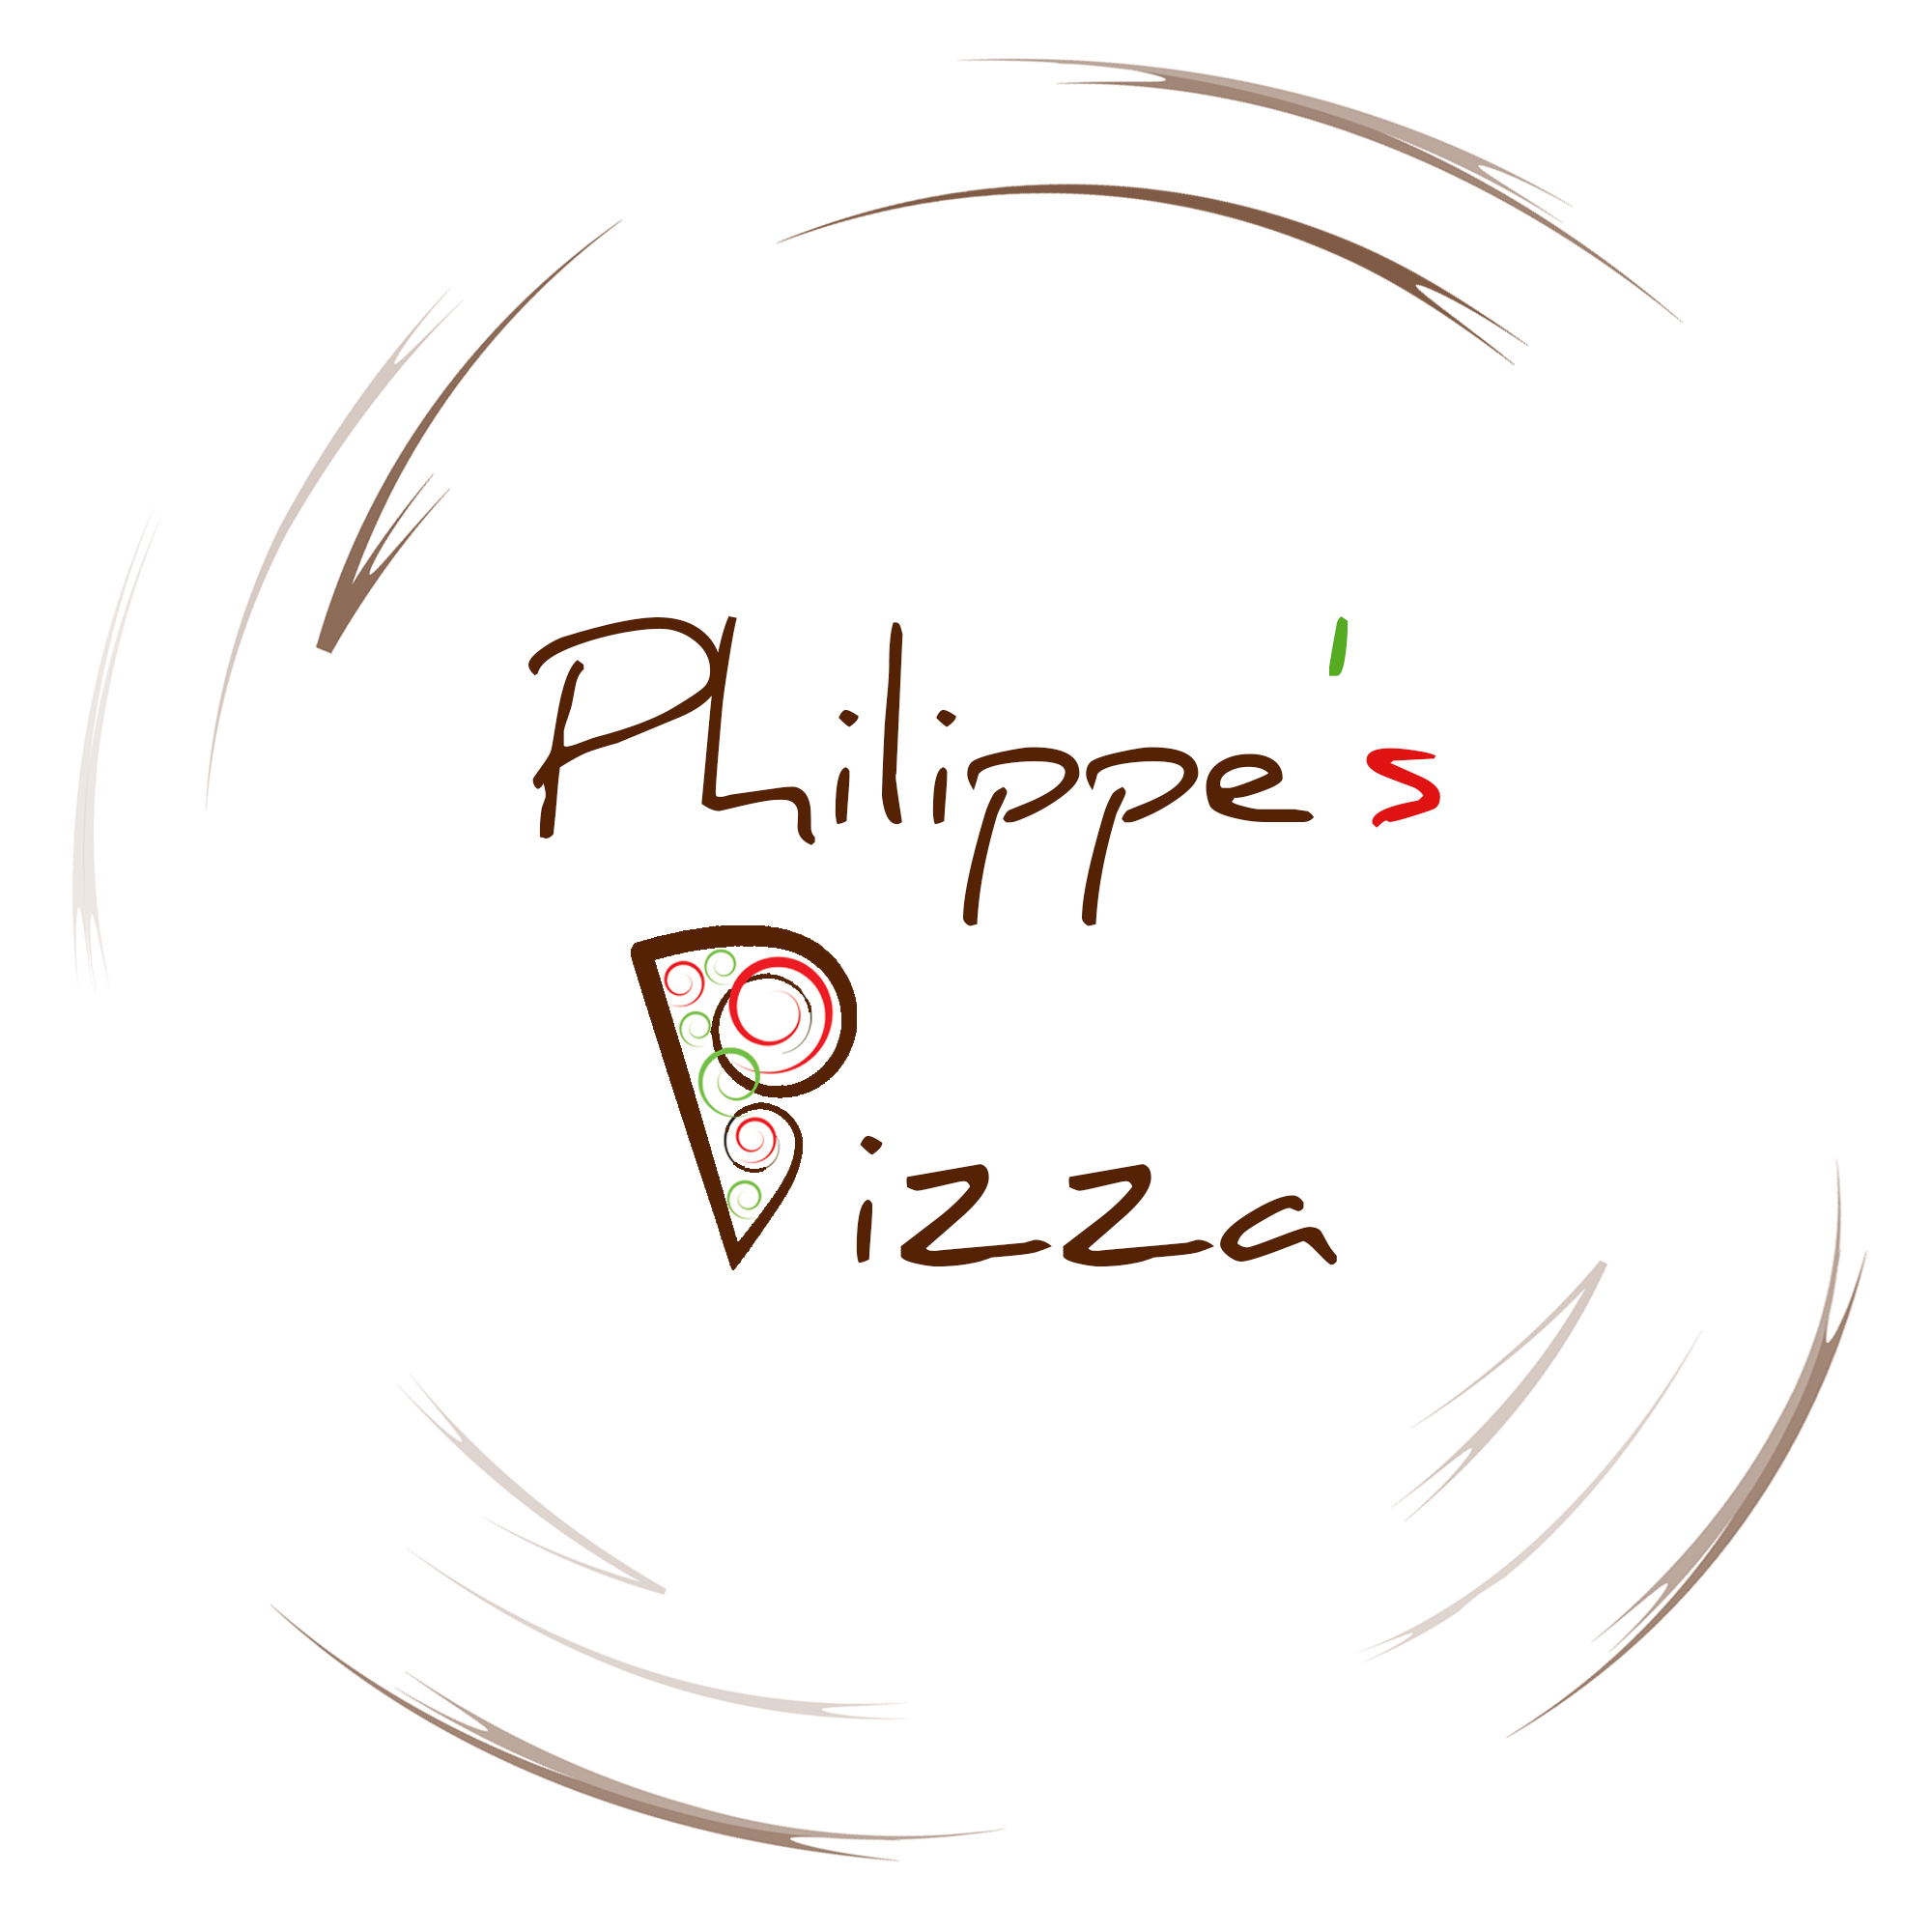 Philippe's Pizza